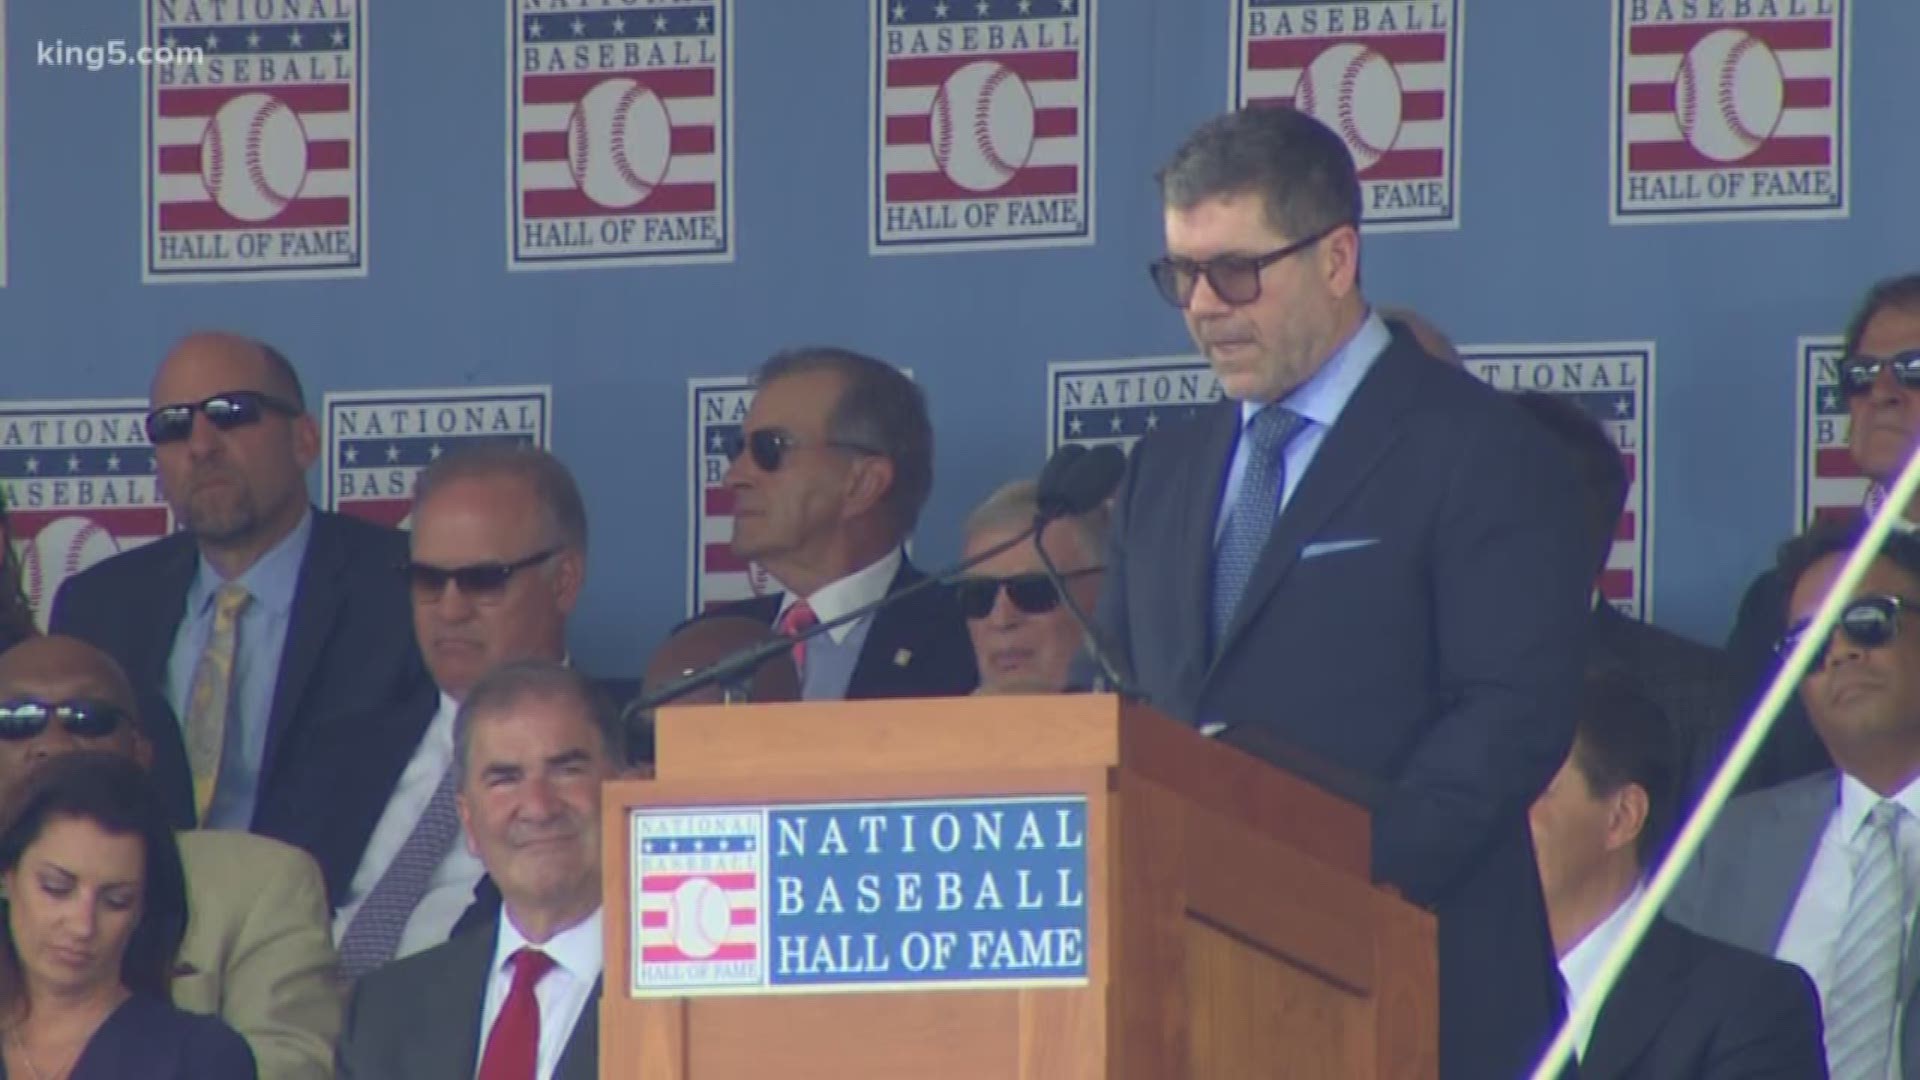 Finally, Mariners legend Edgar Martinez joins the Baseball Hall of Fame